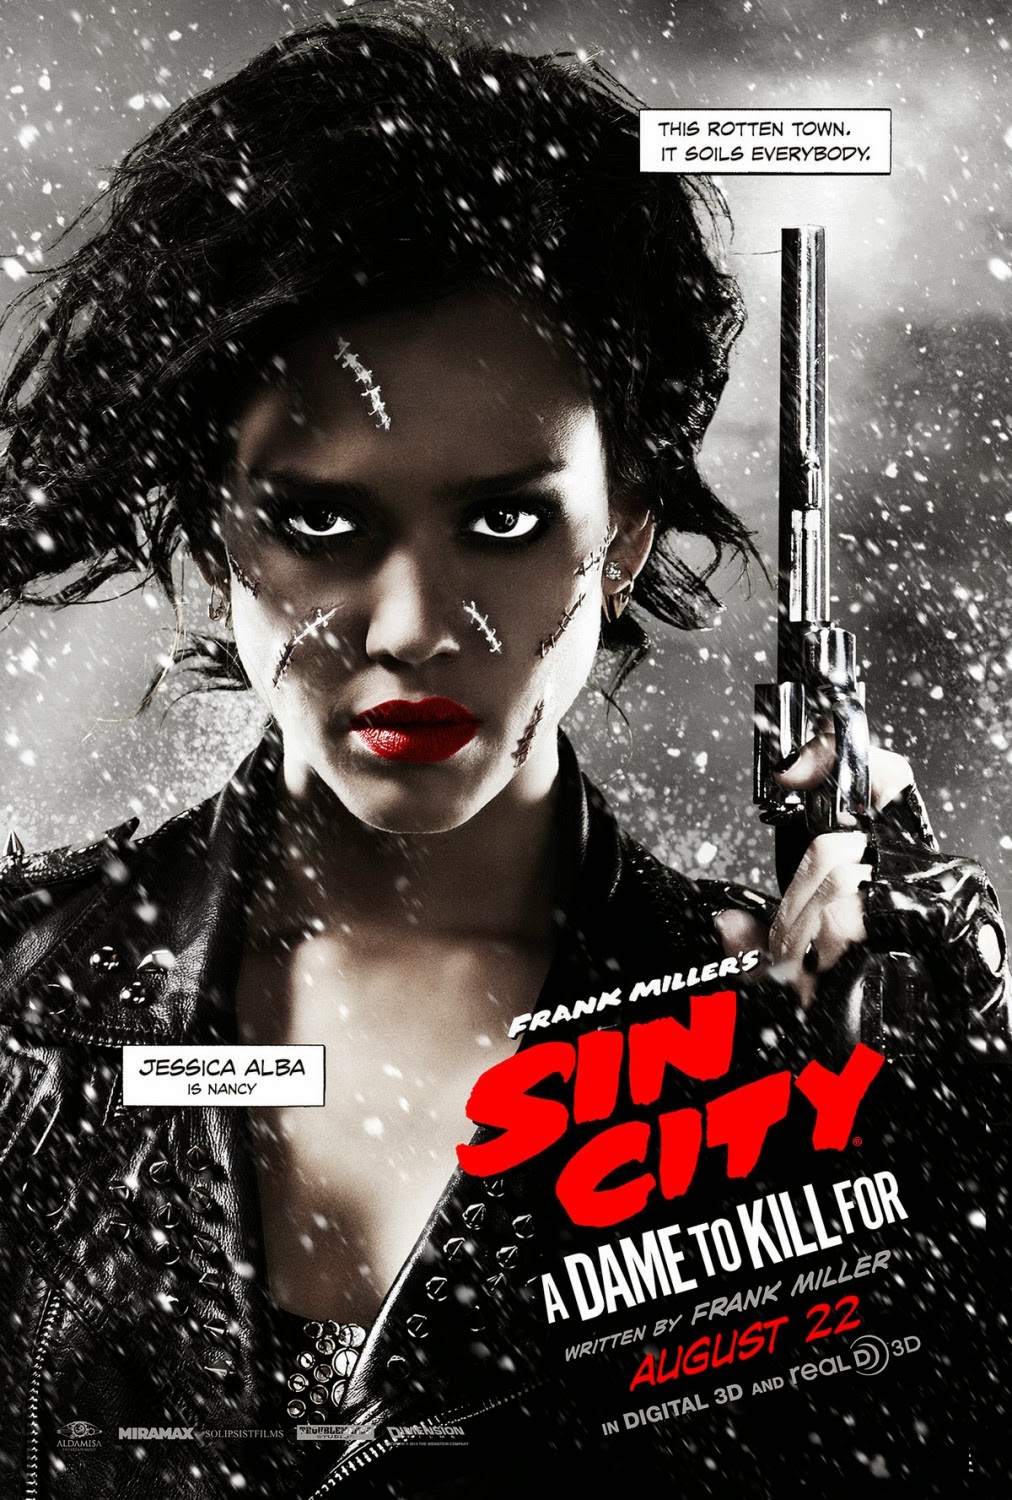 ｃｉａ こちら映画中央情報局です Sin City 2 ロバート ロドリゲス監督のカルト コミック映画の続編 シン シティ2 ア デイム トゥ キル フォー が 約9分間のメイキング ビデオをリリース